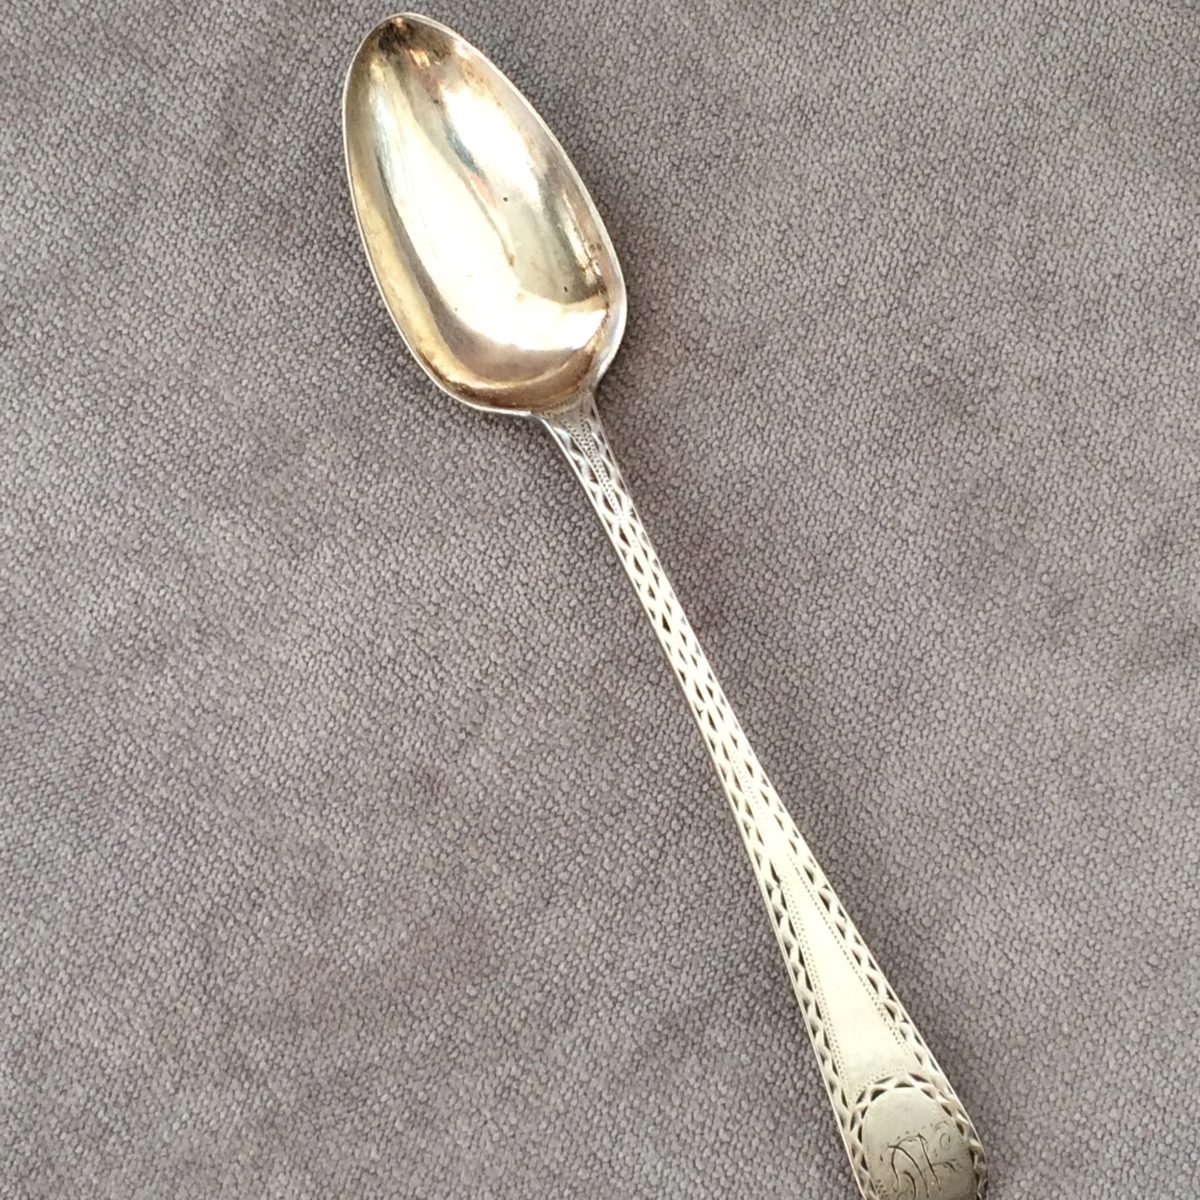 Antique Silver Teaspoon by Joseph Richardson